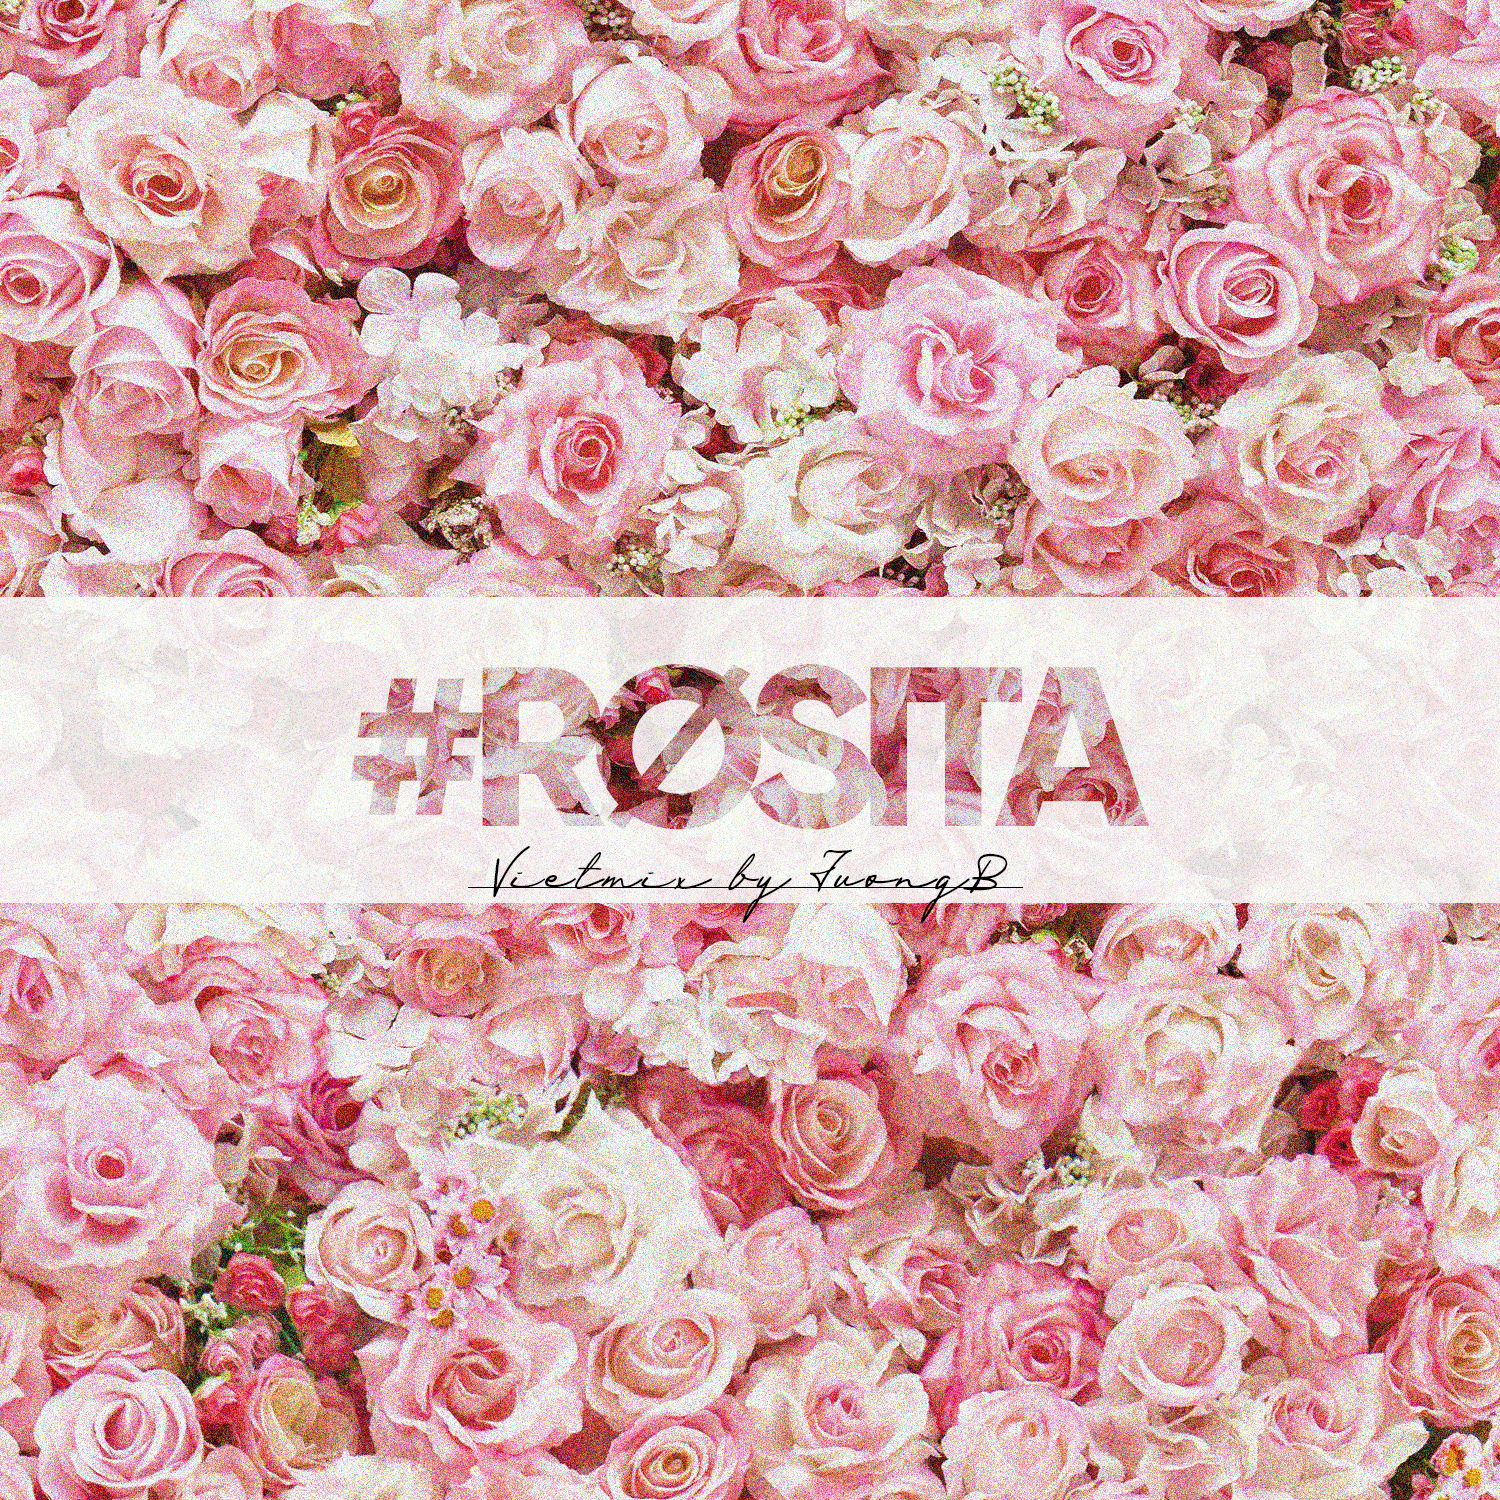 Download #Rosita - Vietmix By JuongB